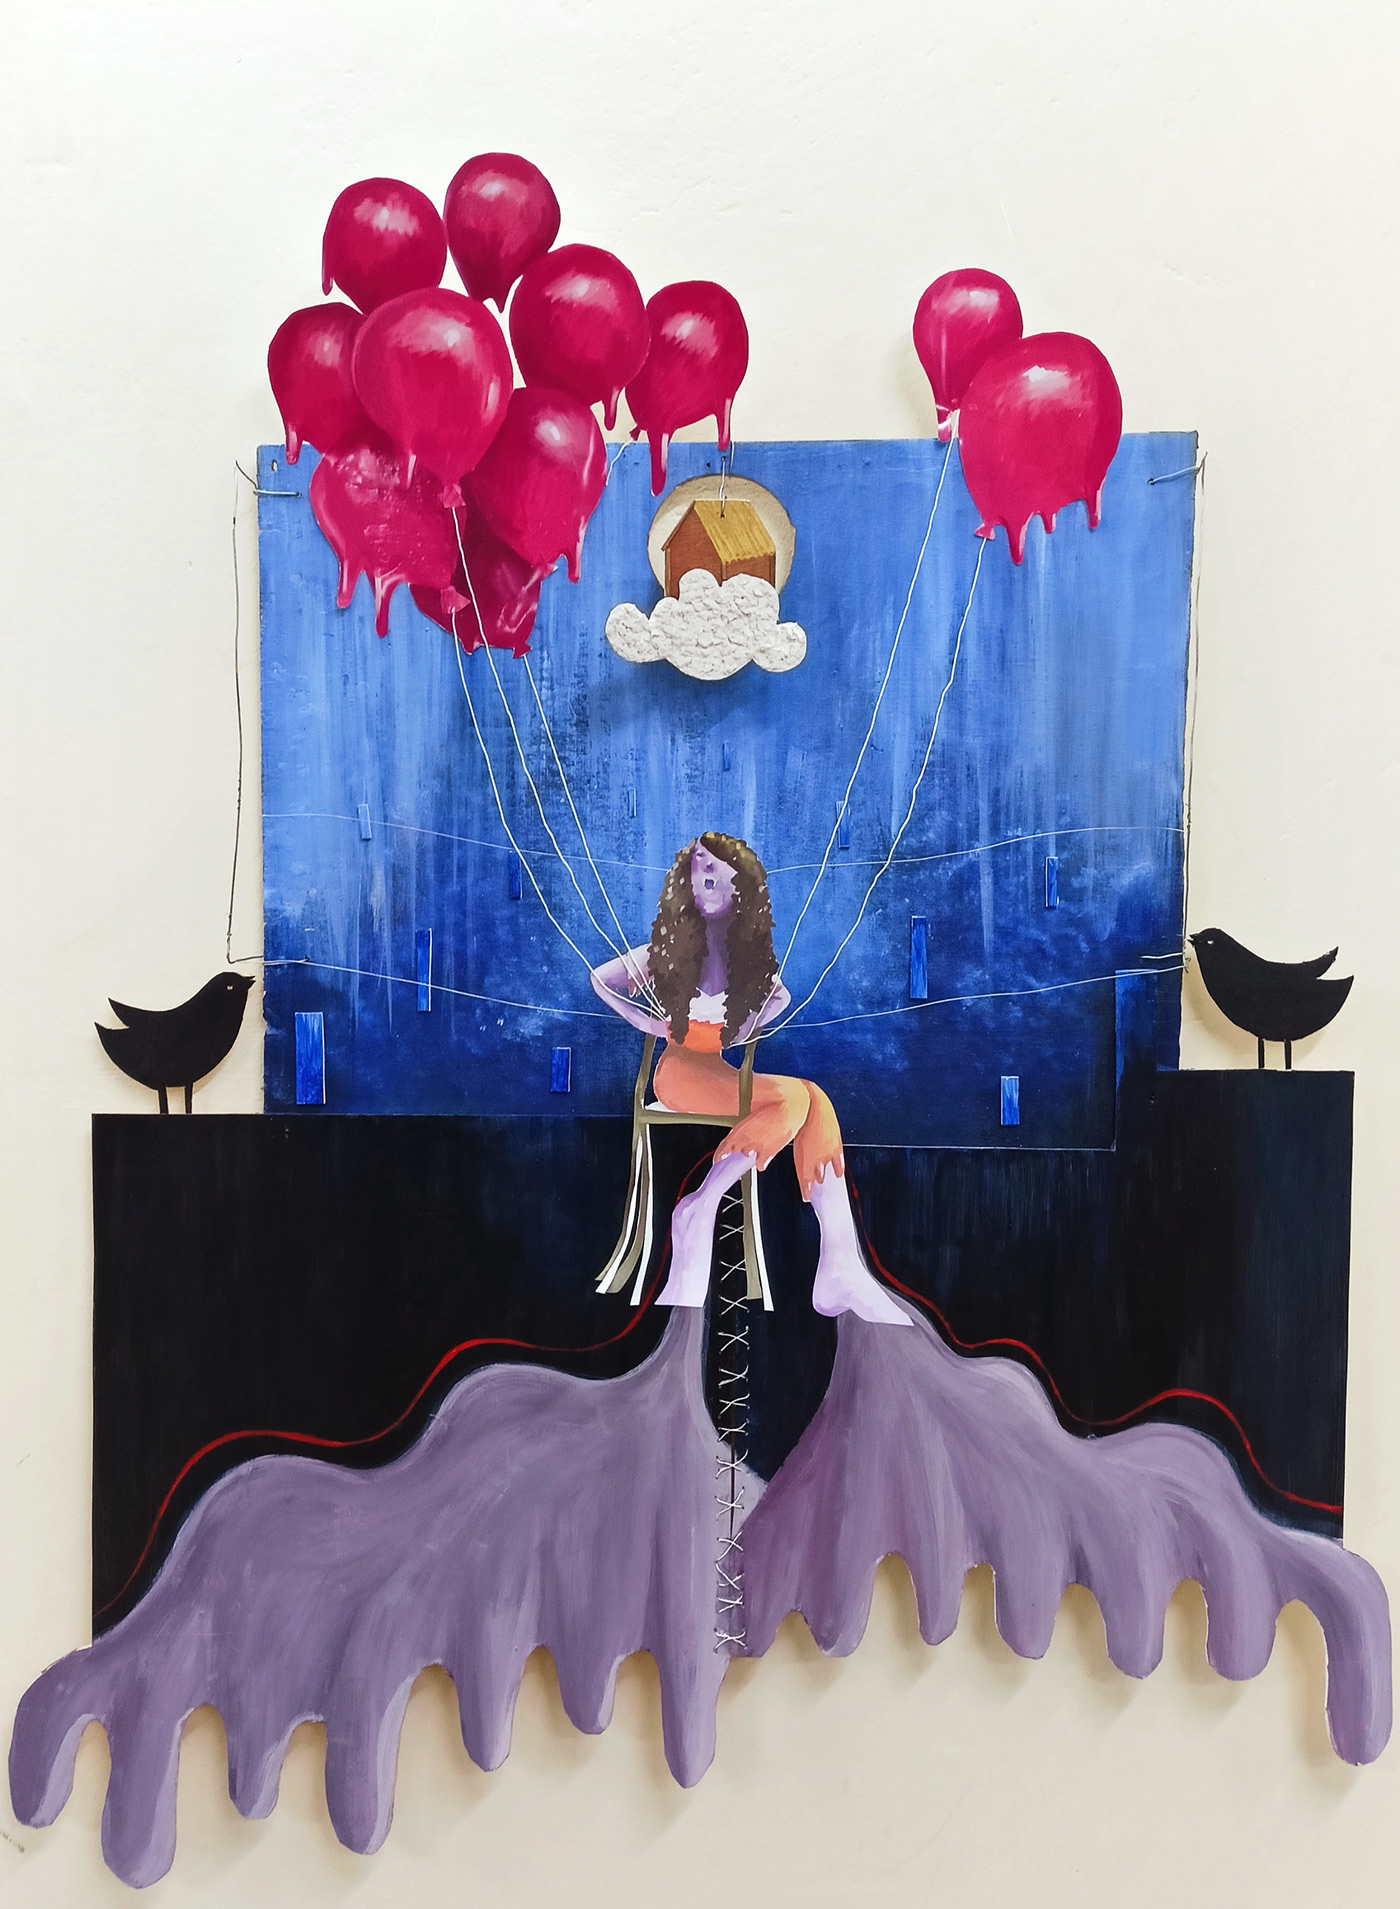 experimental abstract pvc Board plywood balloons conceptual artwork interdisciplinary